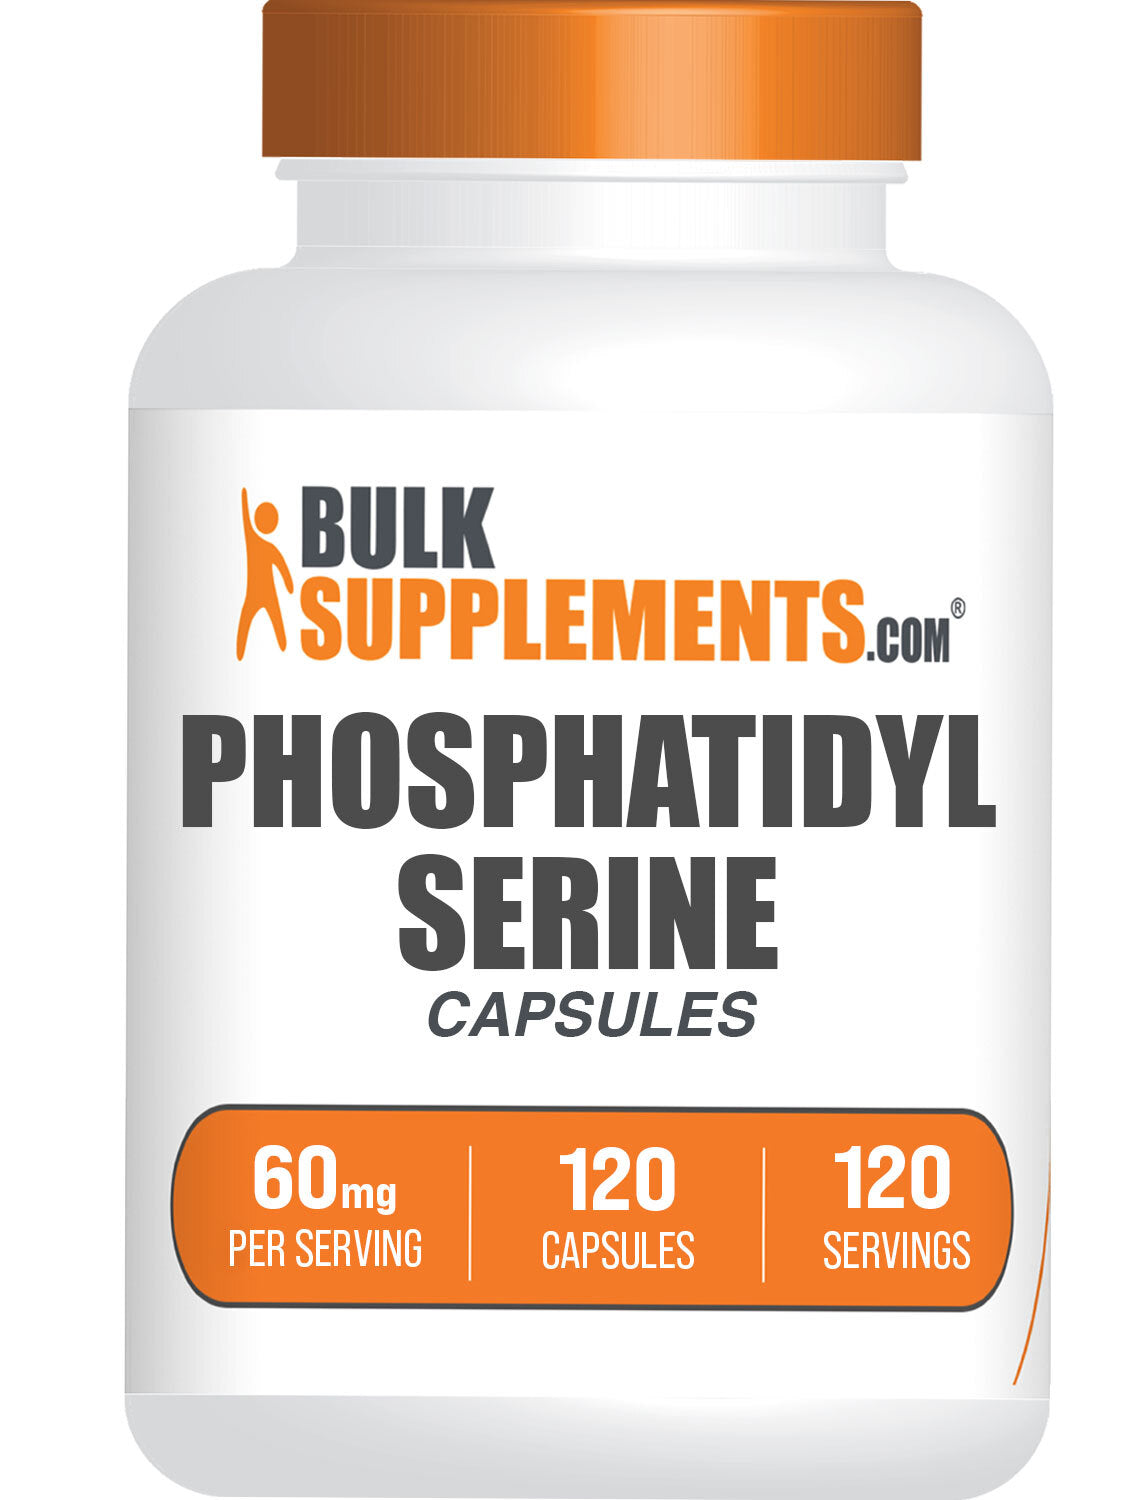 Phosphatidyl serine capsules 120 count